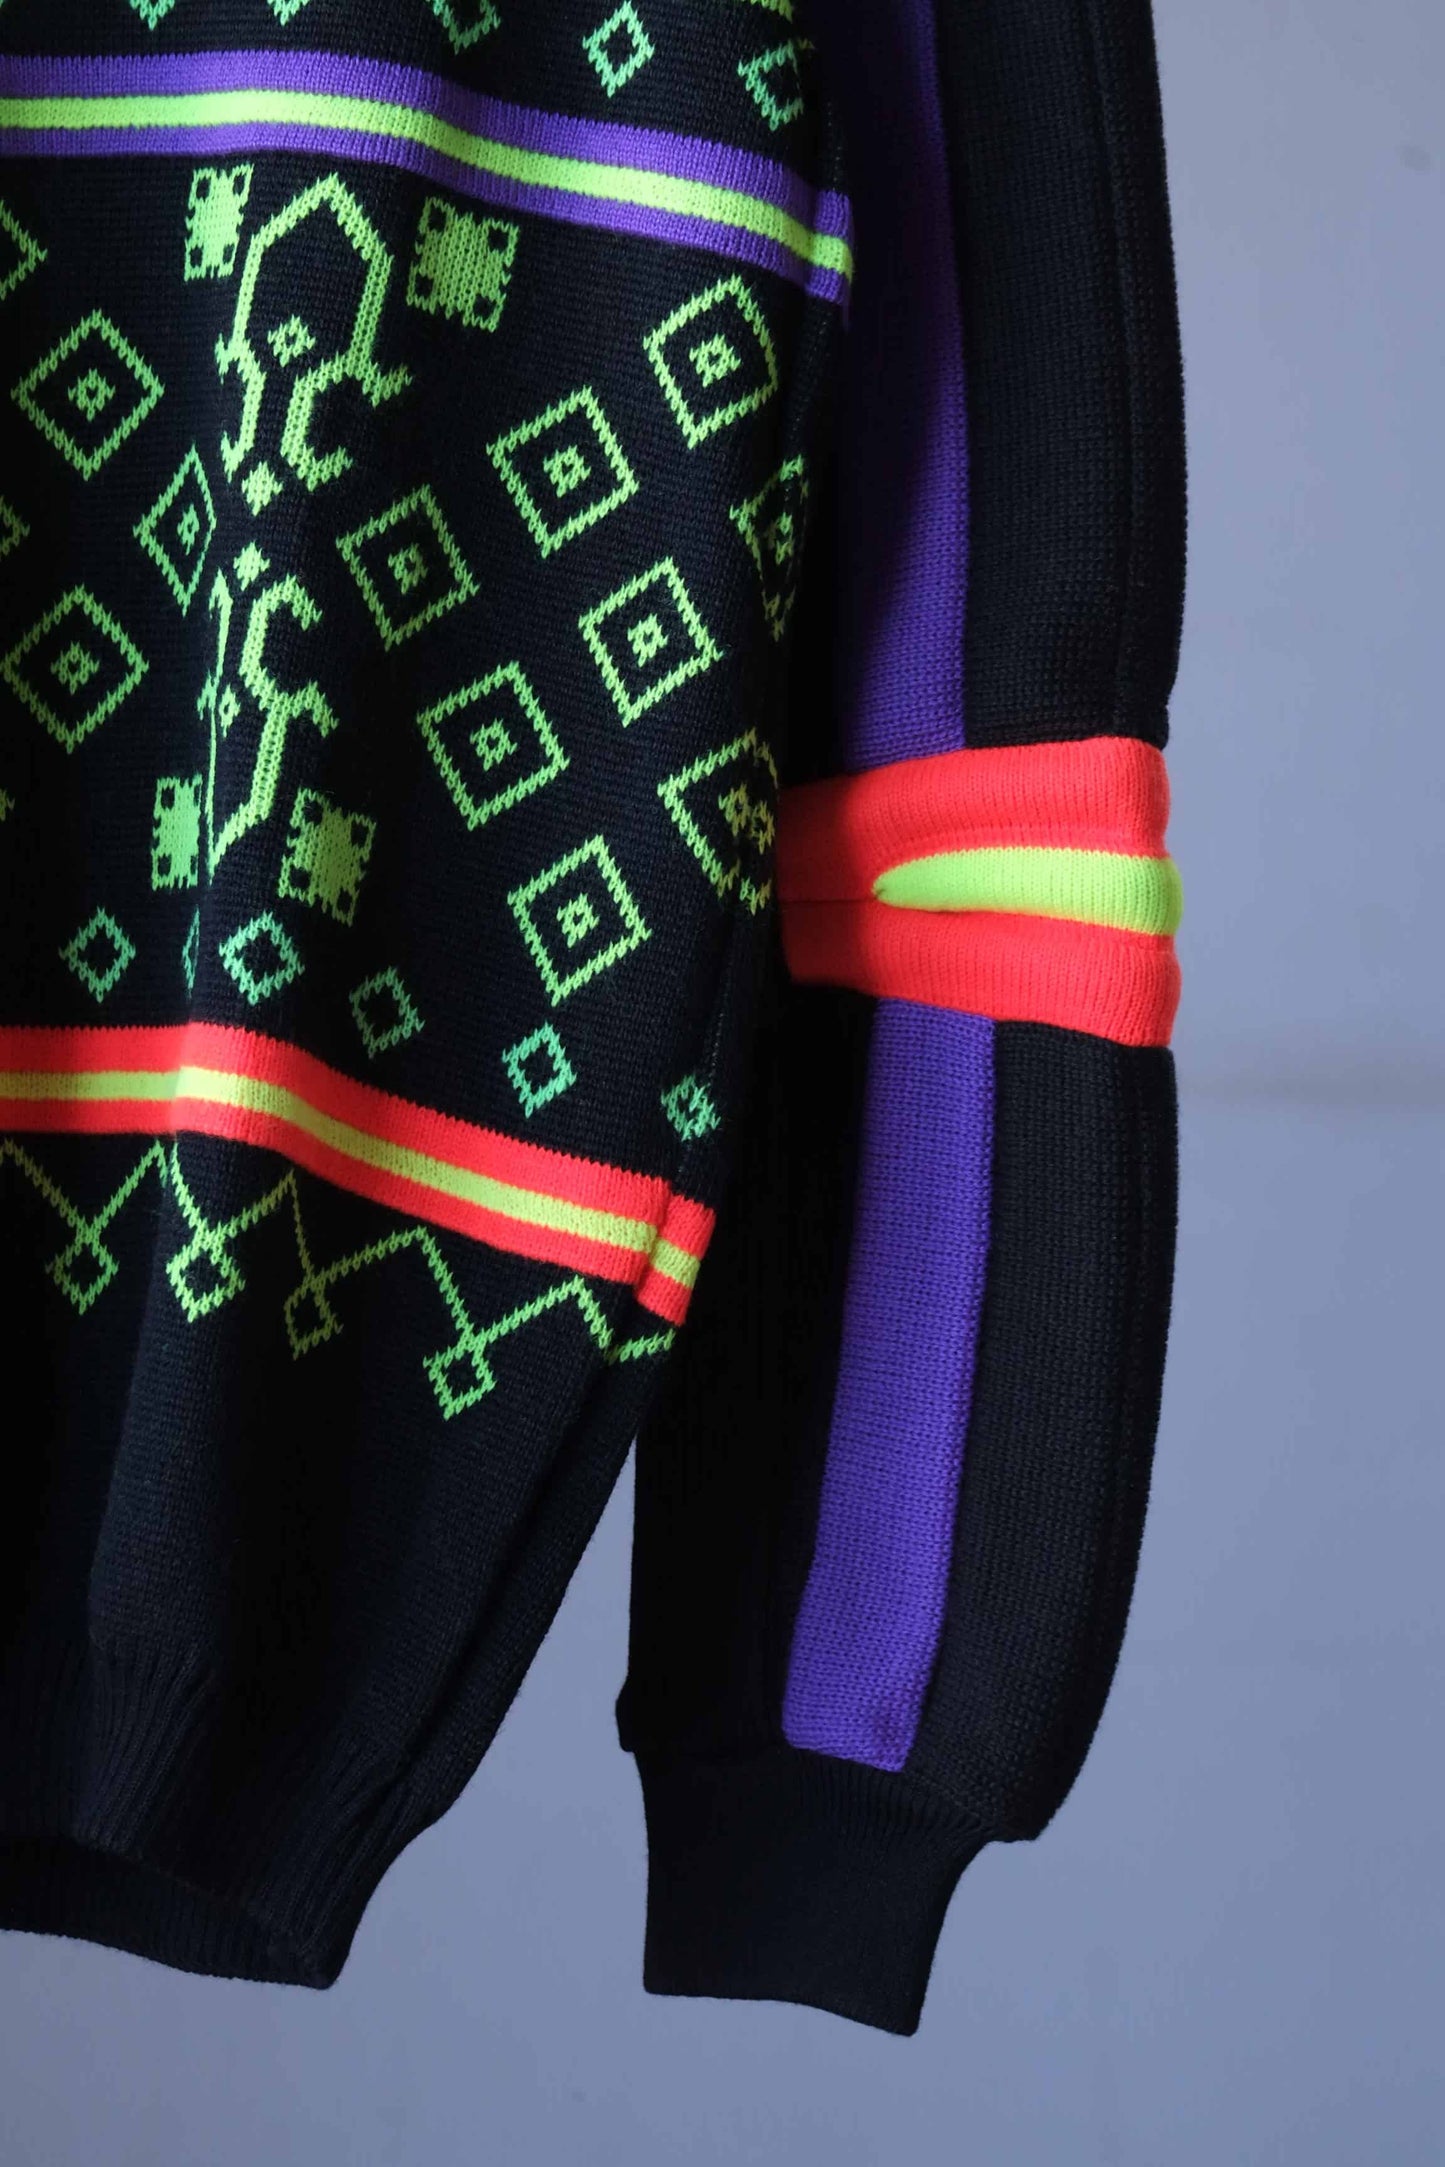 Vintage 90's Neon Jacquard Ski Sweater sleeve detail